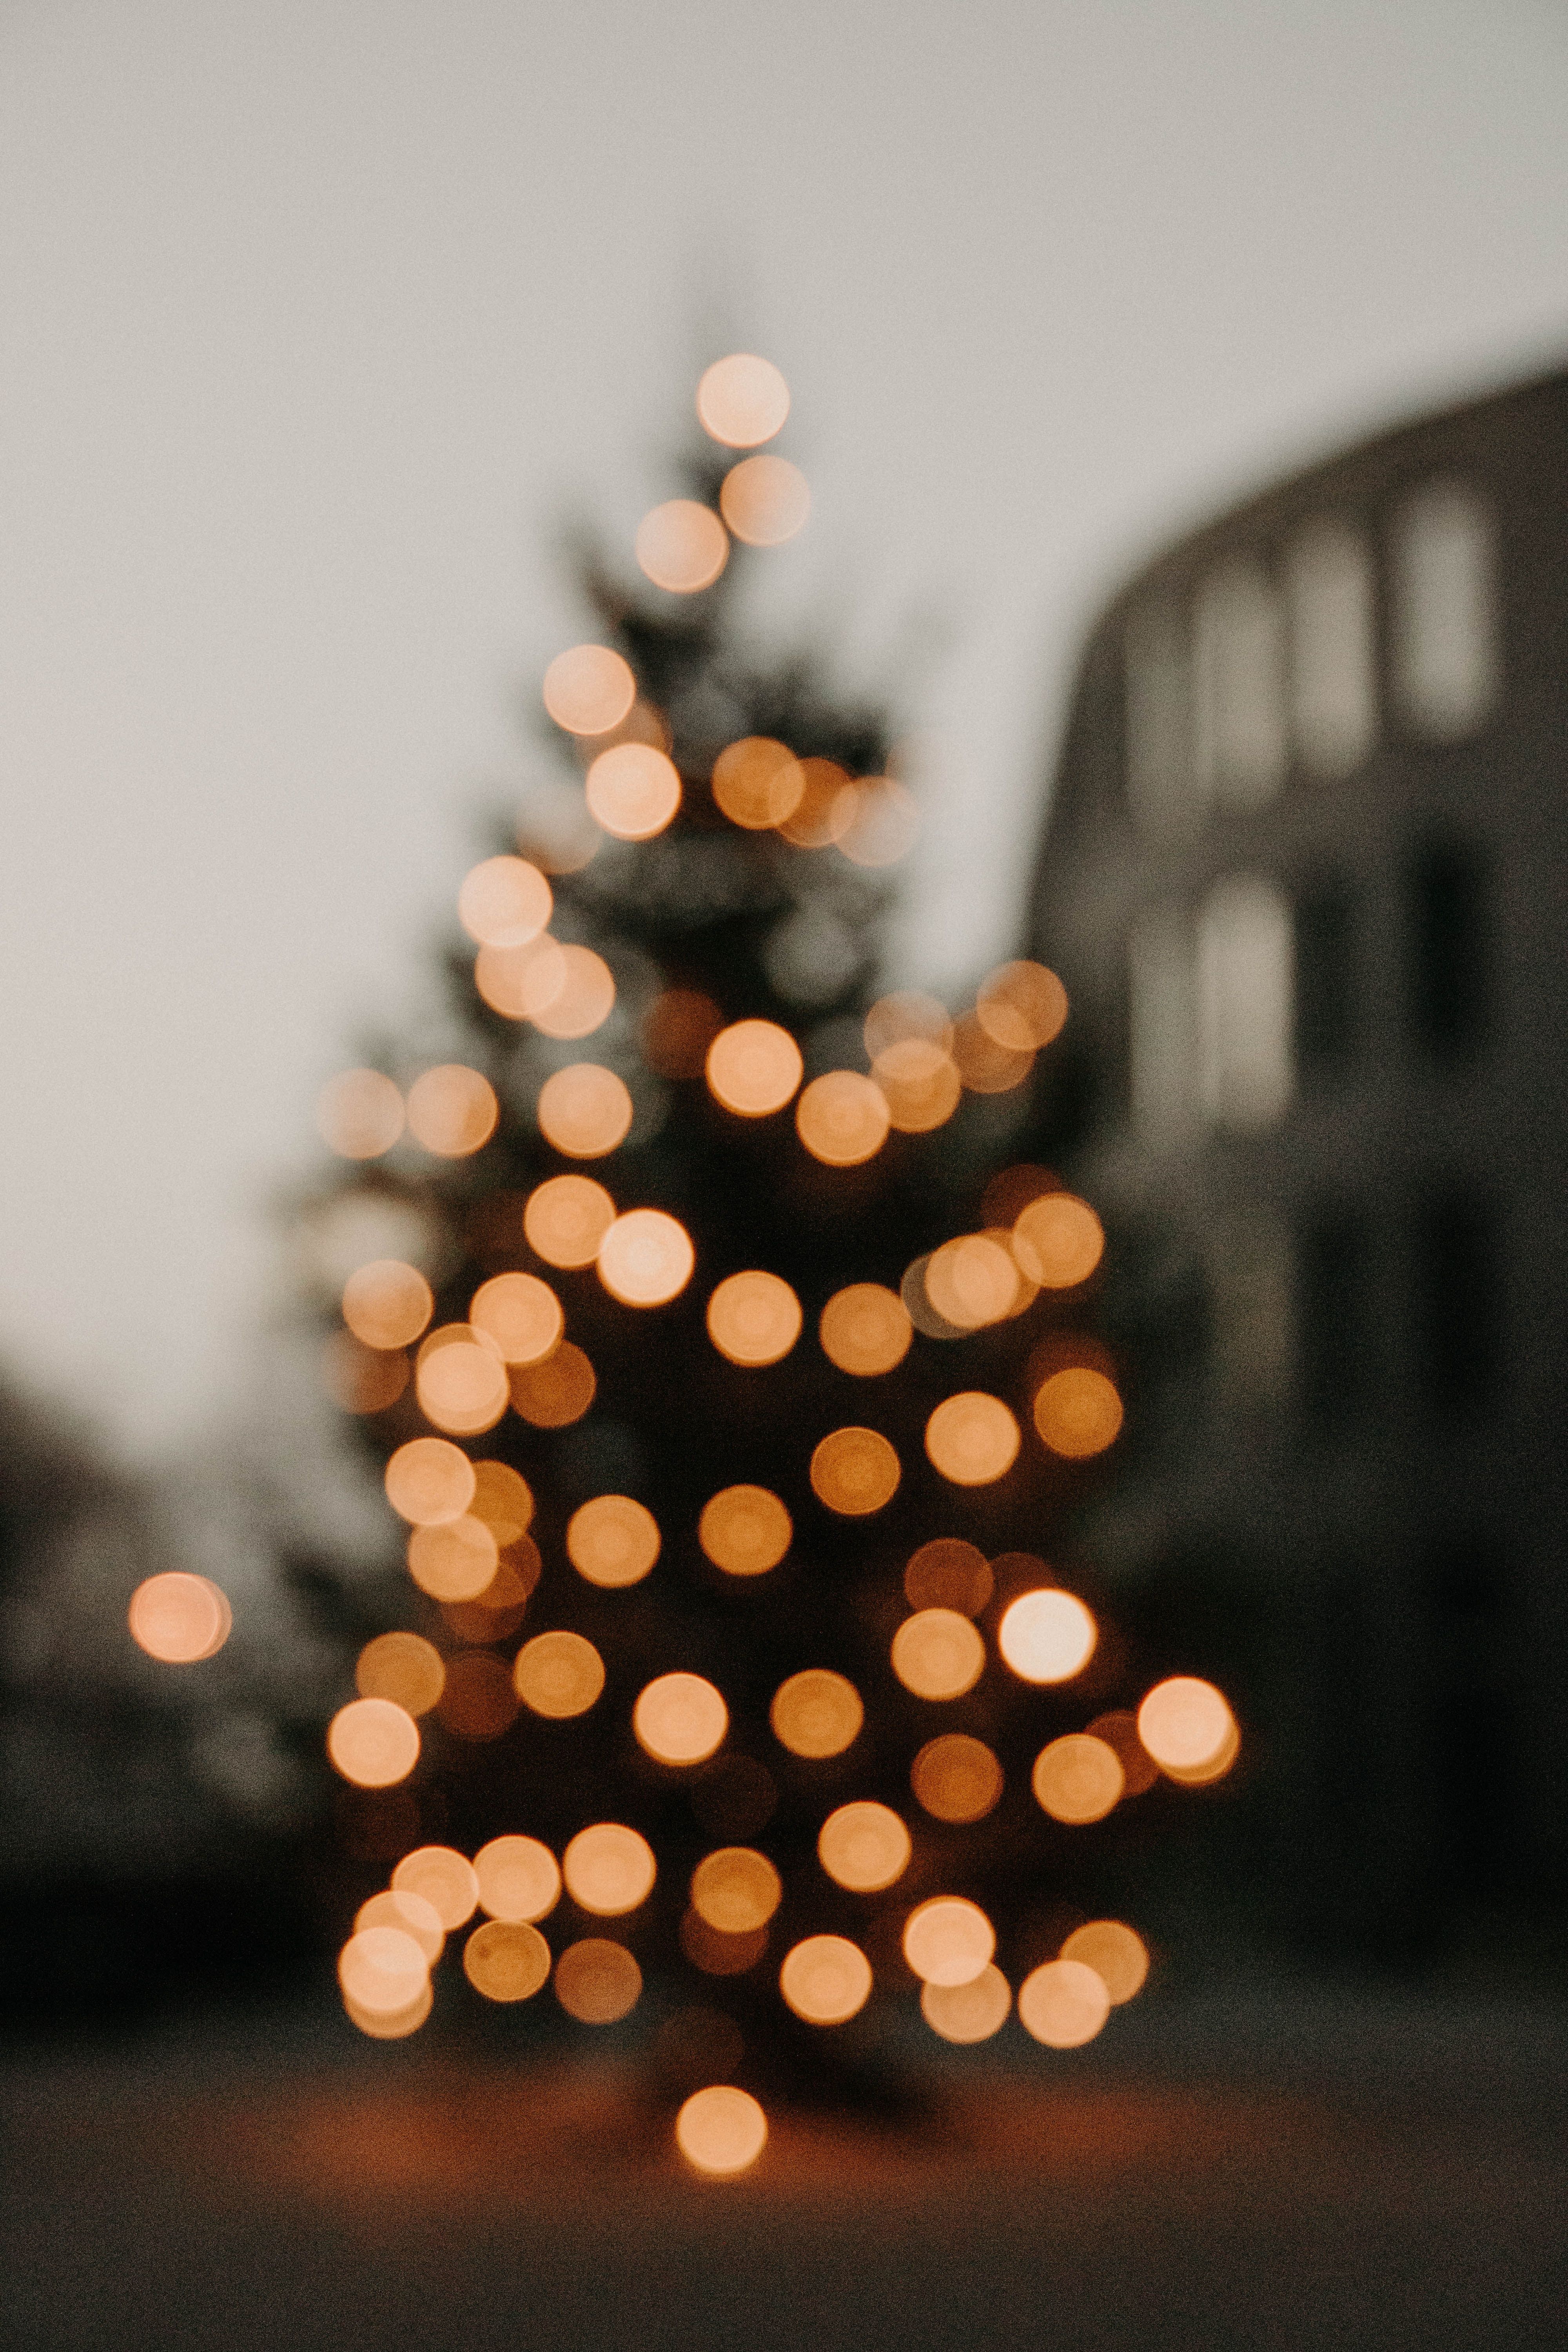 A blurry photo of a Christmas tree with white lights. - Christmas lights